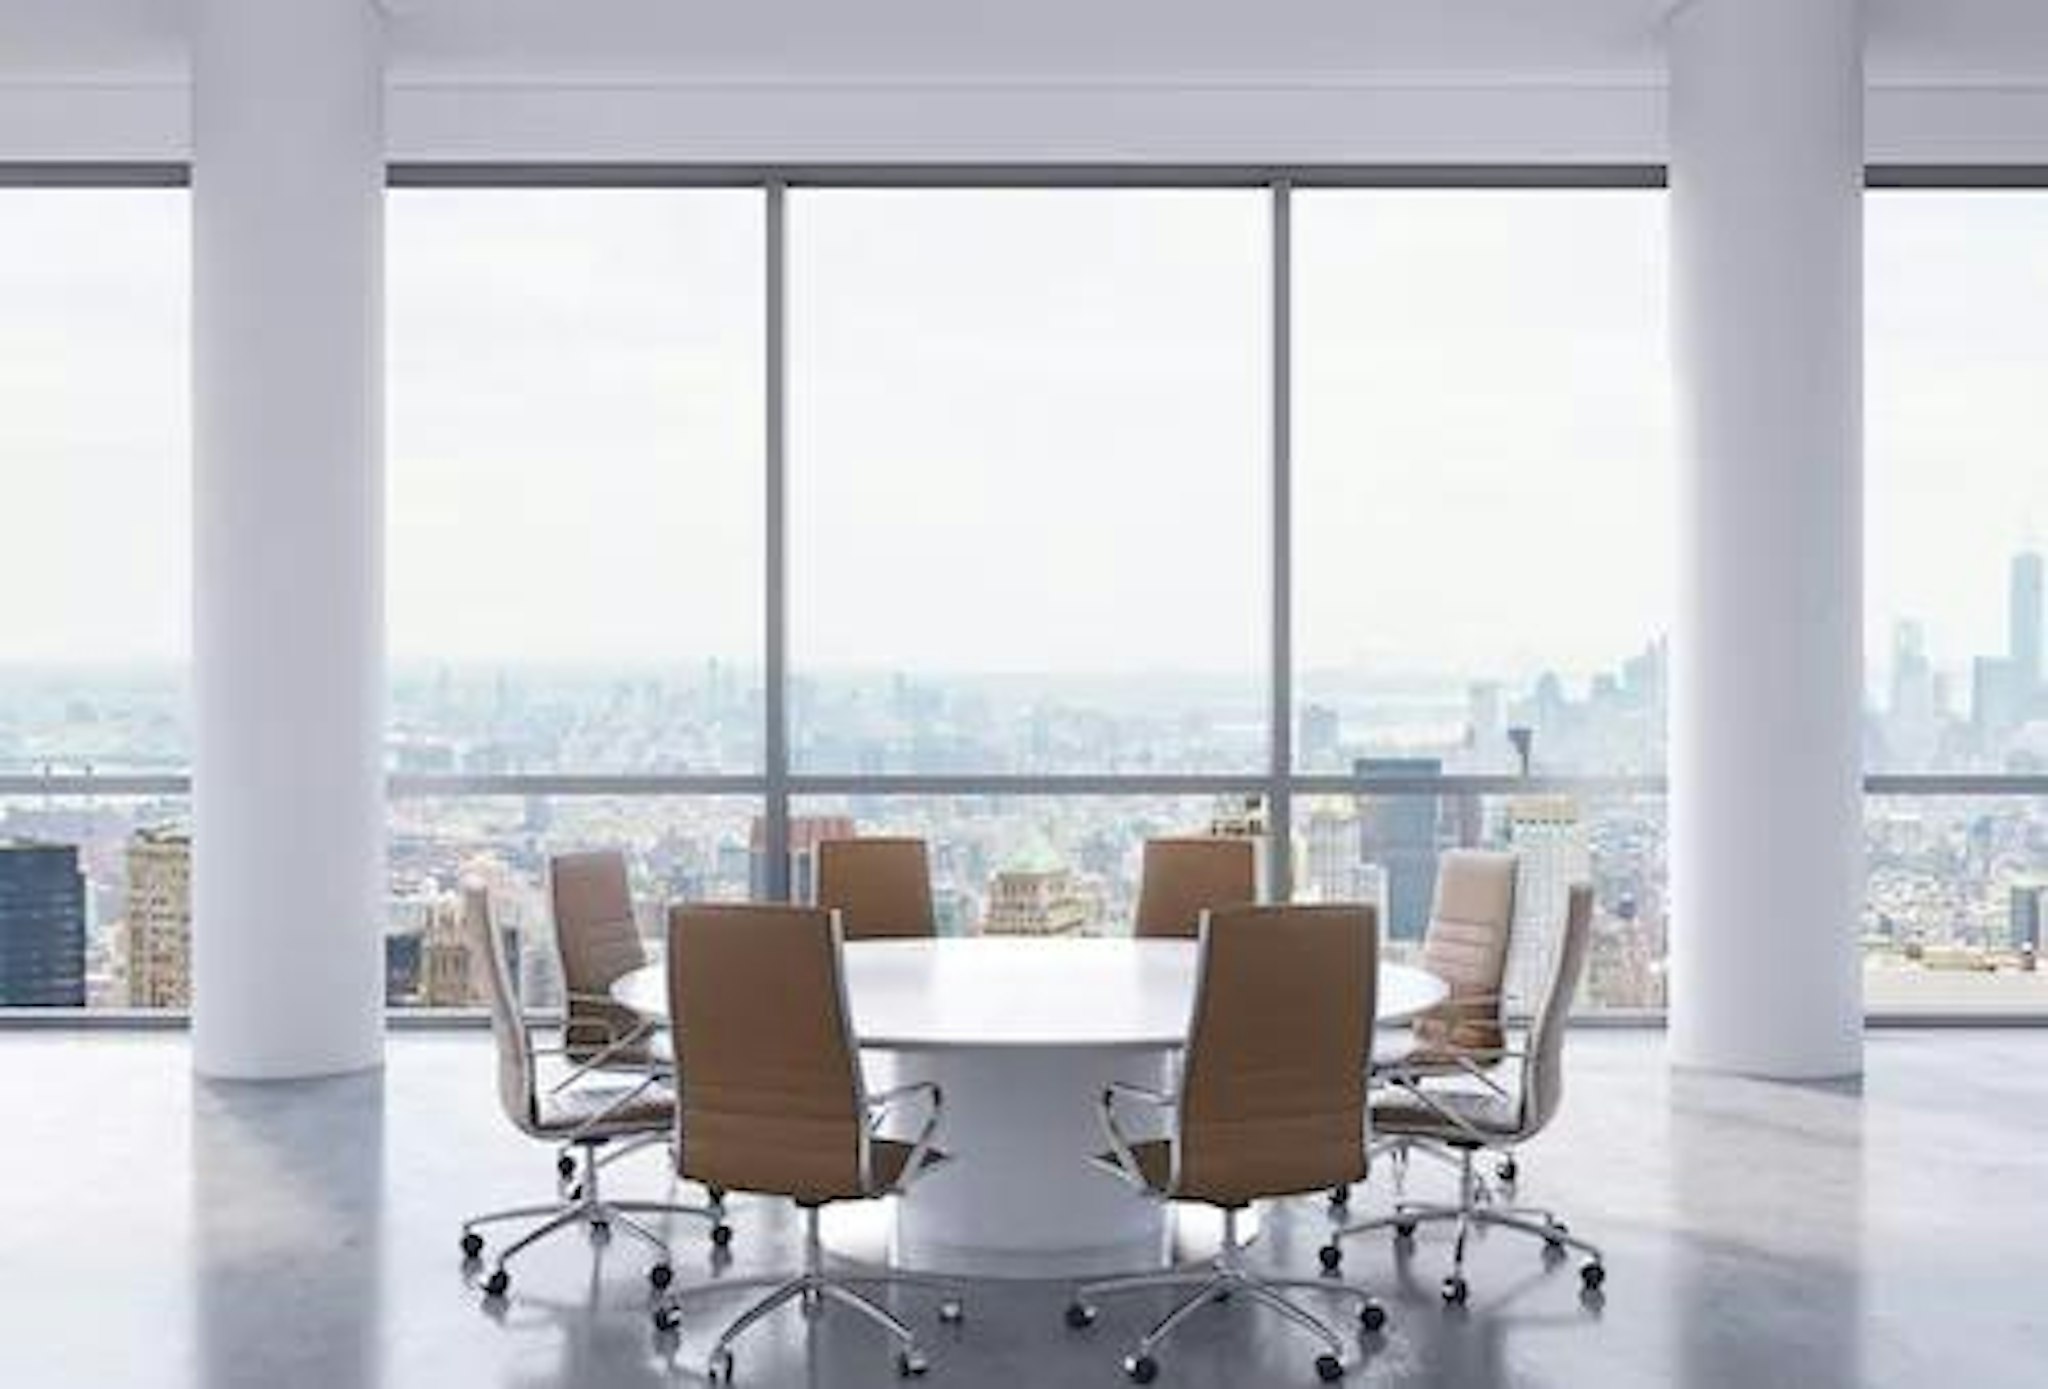 A board room representing private equity advisory board responsibilities